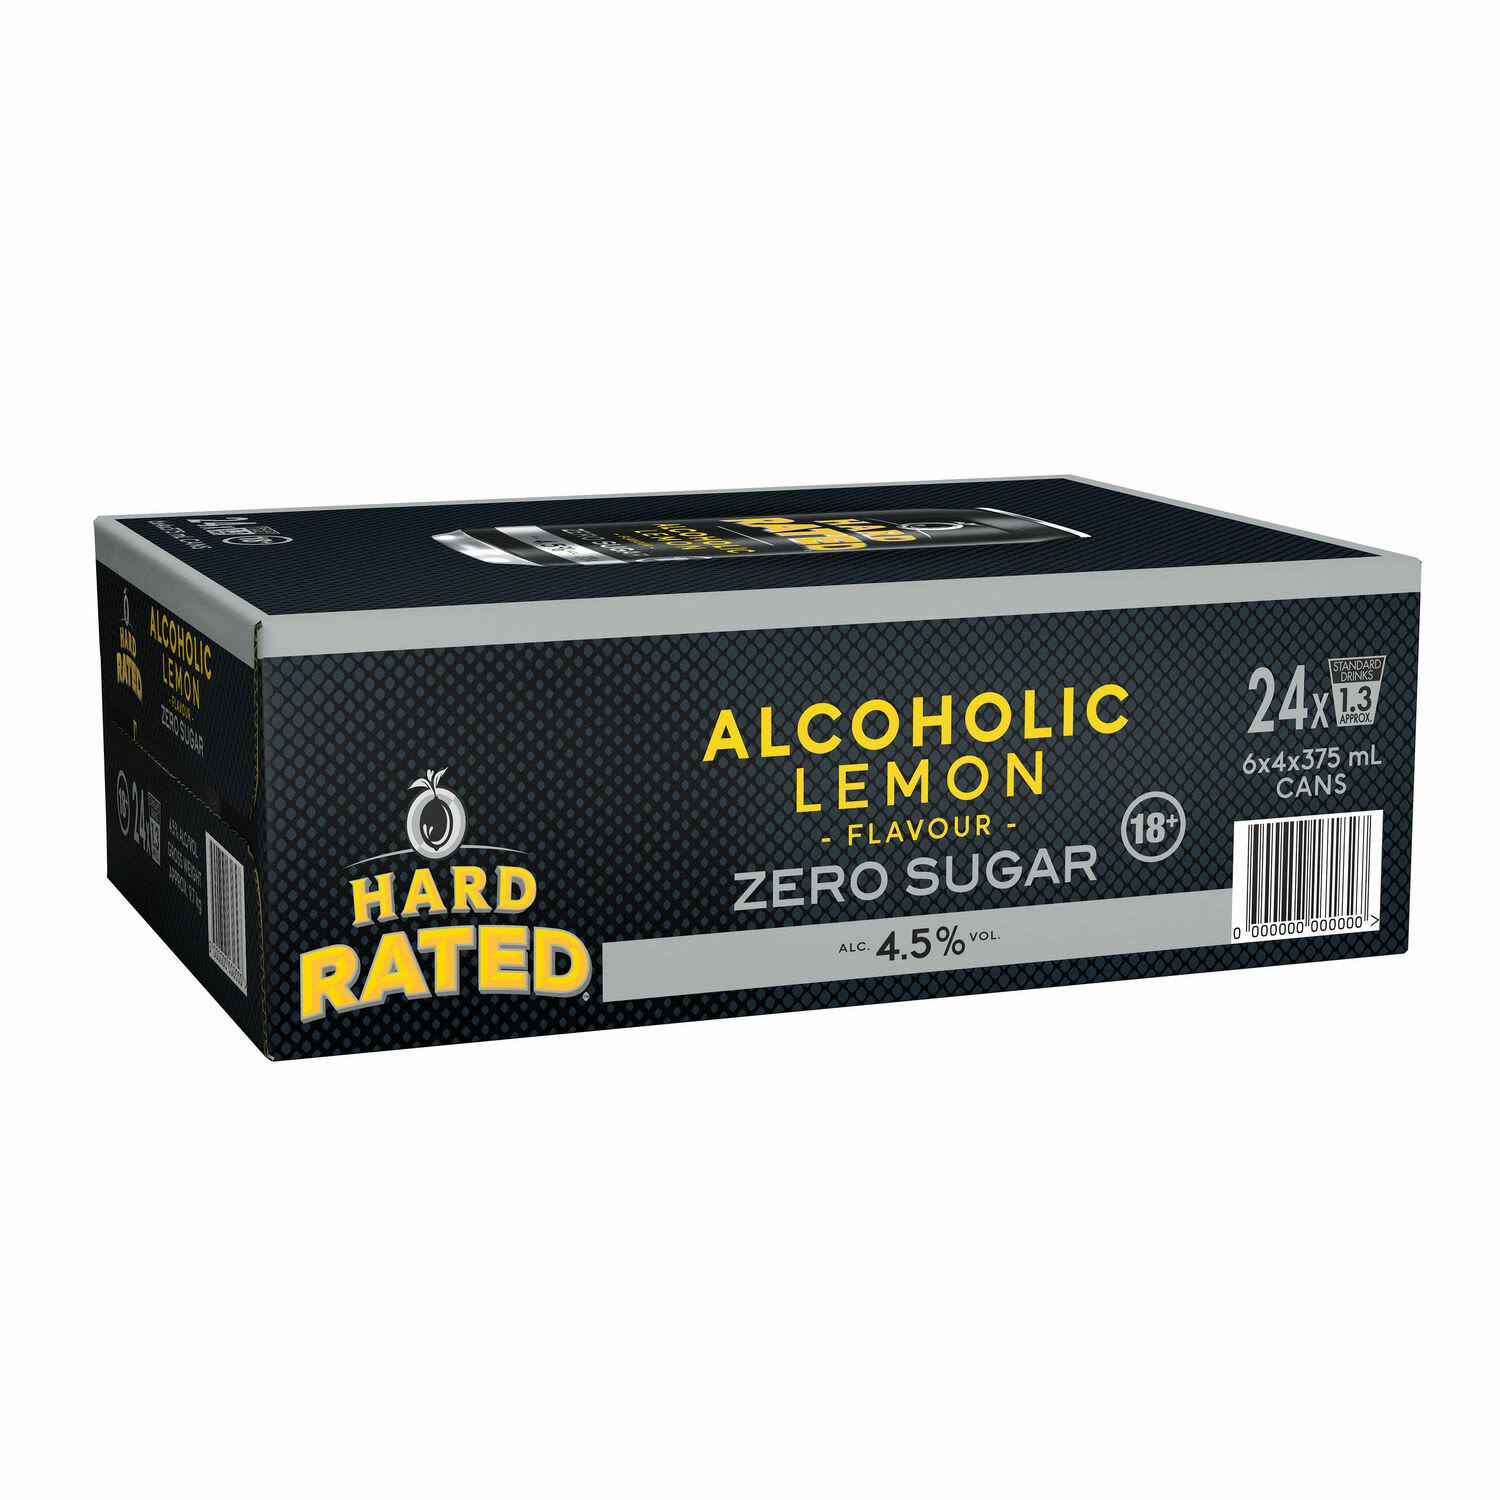 Hard Rated Zero Sugar Alcoholic Lemon Can 375mL 24 Pack